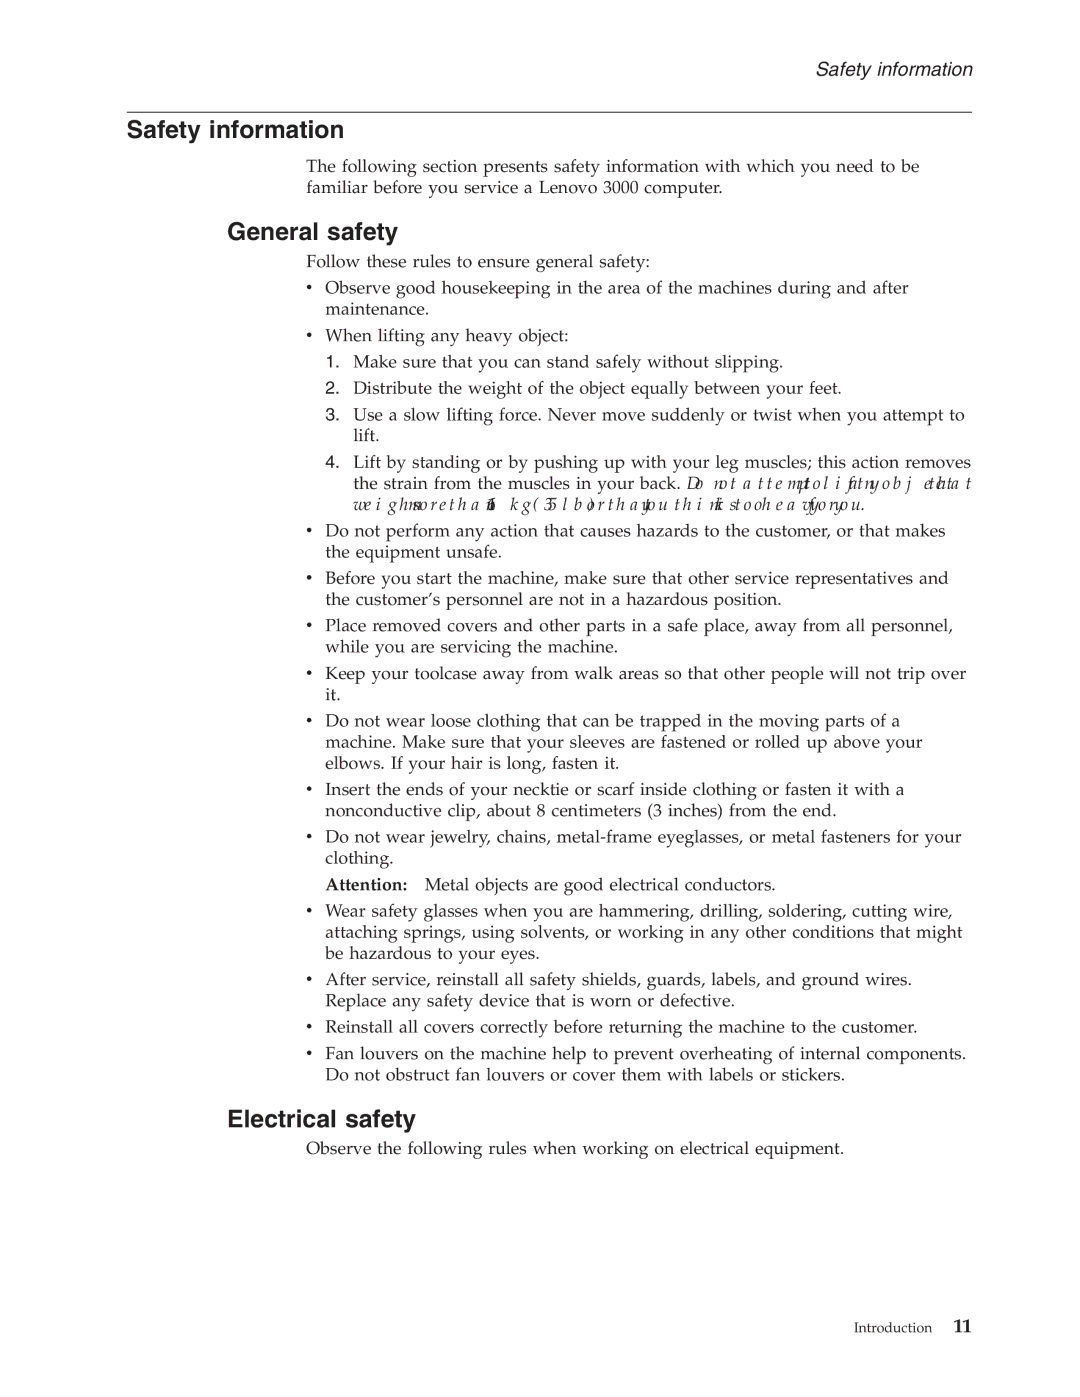 Lenovo V200, V100 manual Safety information, General safety, Electrical safety 